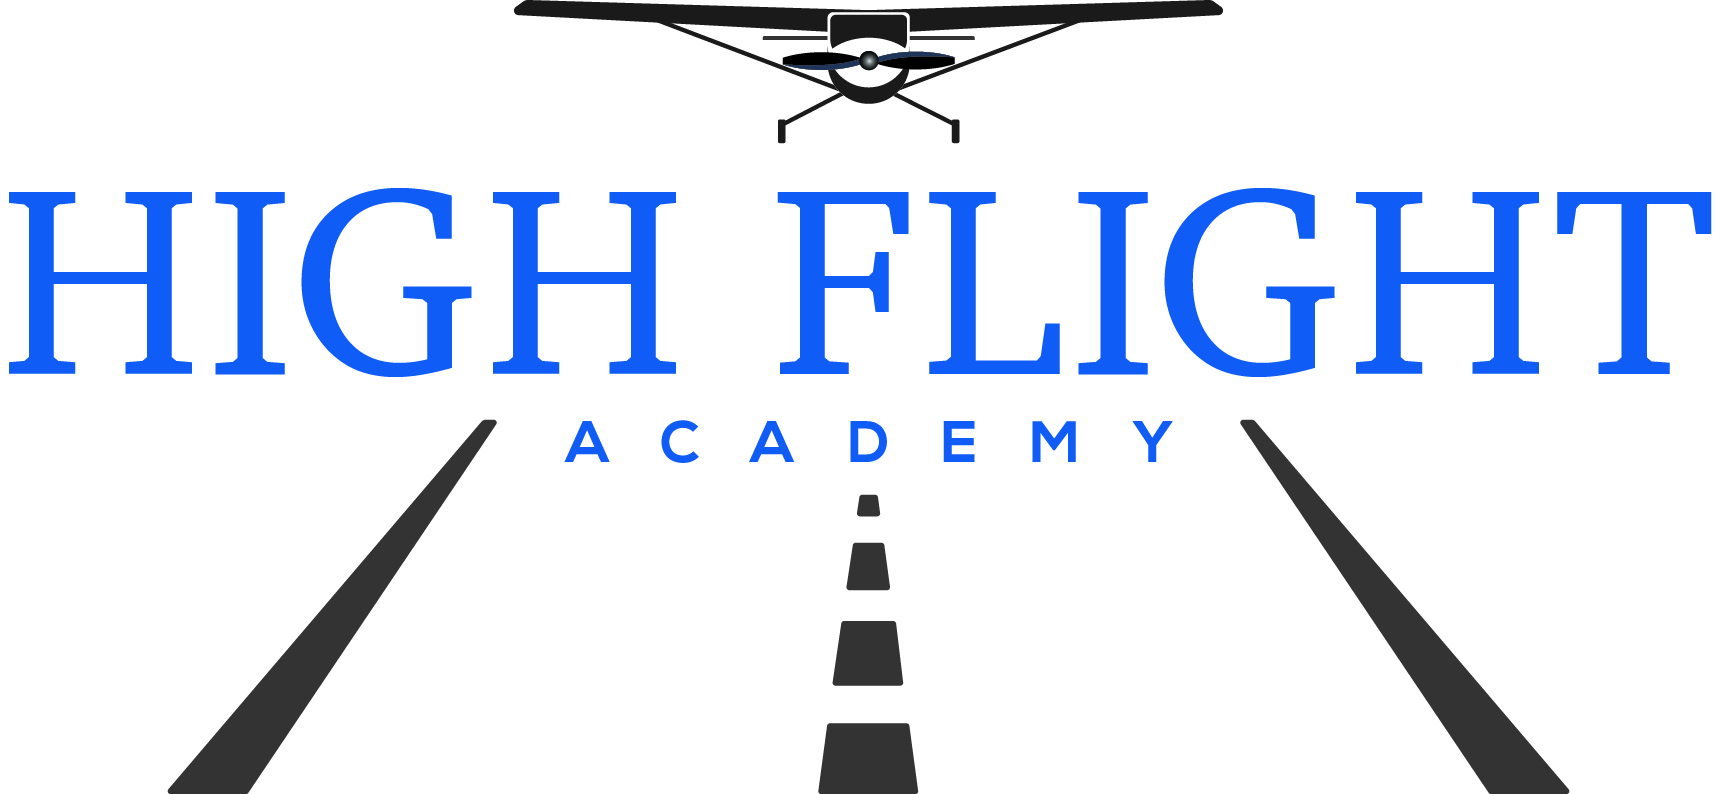 High Flight Academy logo